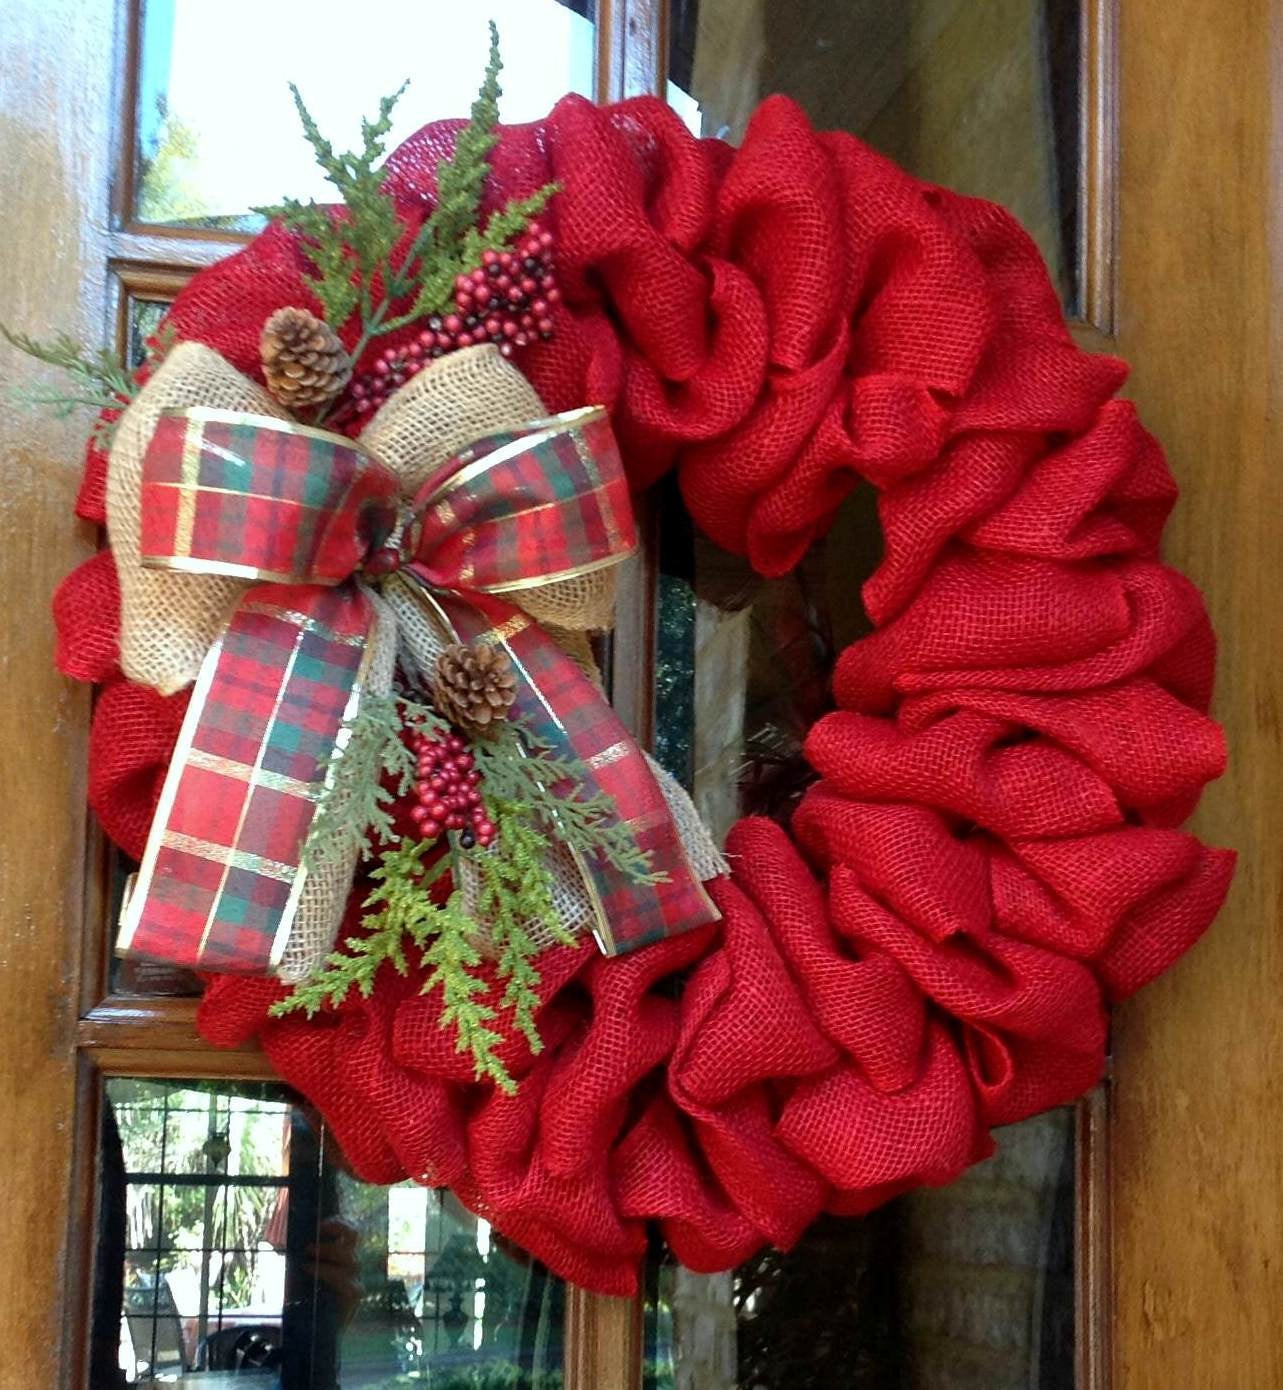 DIY Burlap Christmas Wreaths
 Burlap Wreath Winter wreath Christmas wreath Rustic country